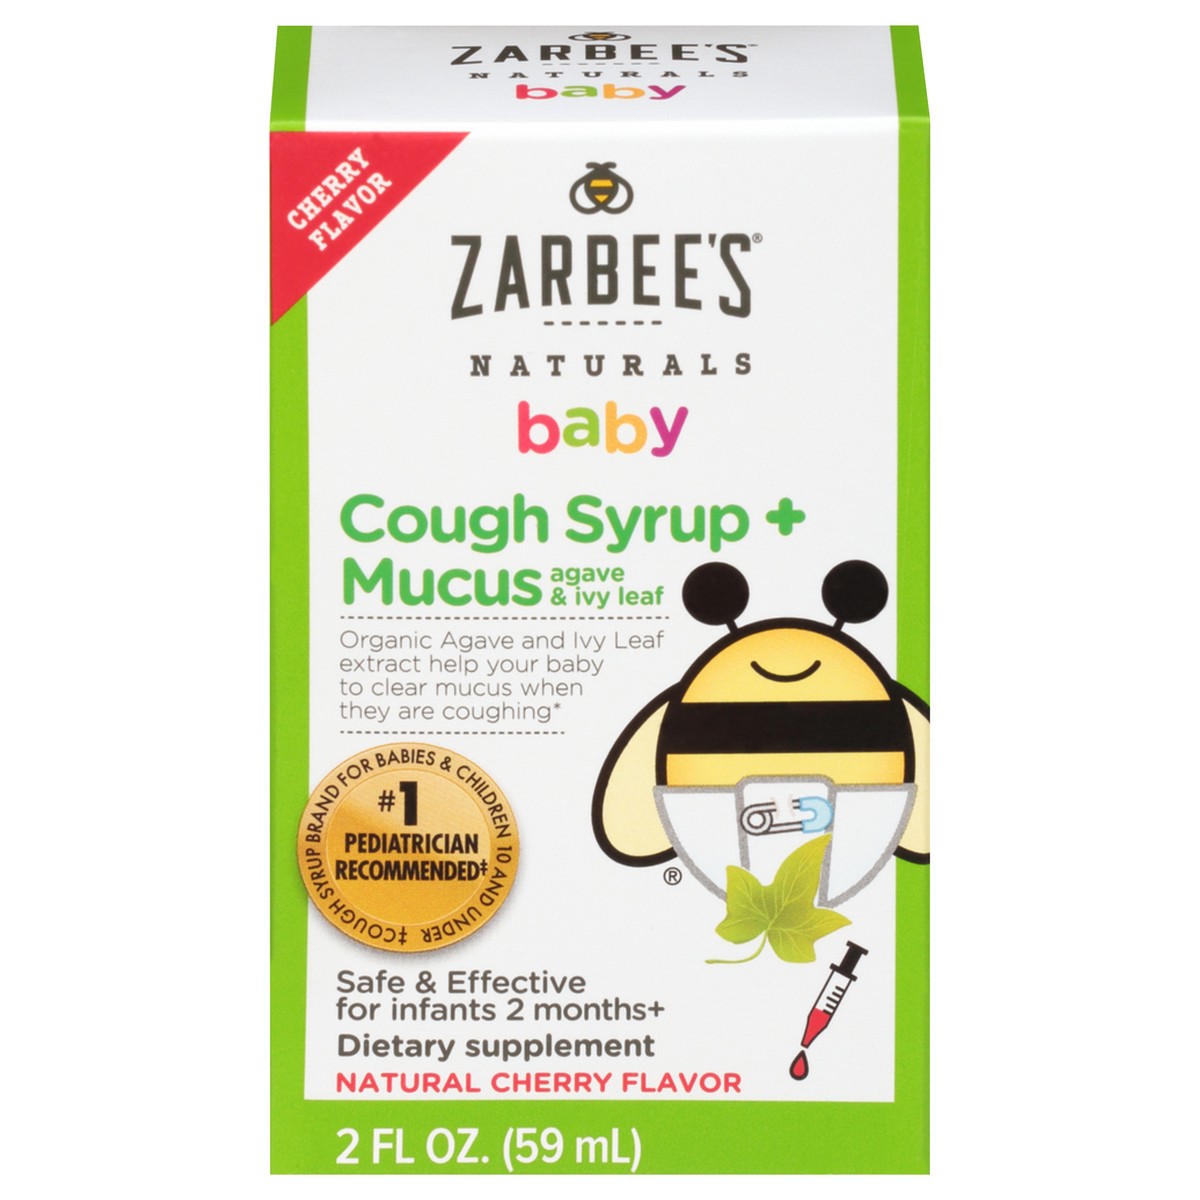 slide 1 of 9, Zarbee's Naturals Naturals Baby Natural Cherry Flavor Cough Syrup + Mucus 2 fl oz Box, 2 fl oz